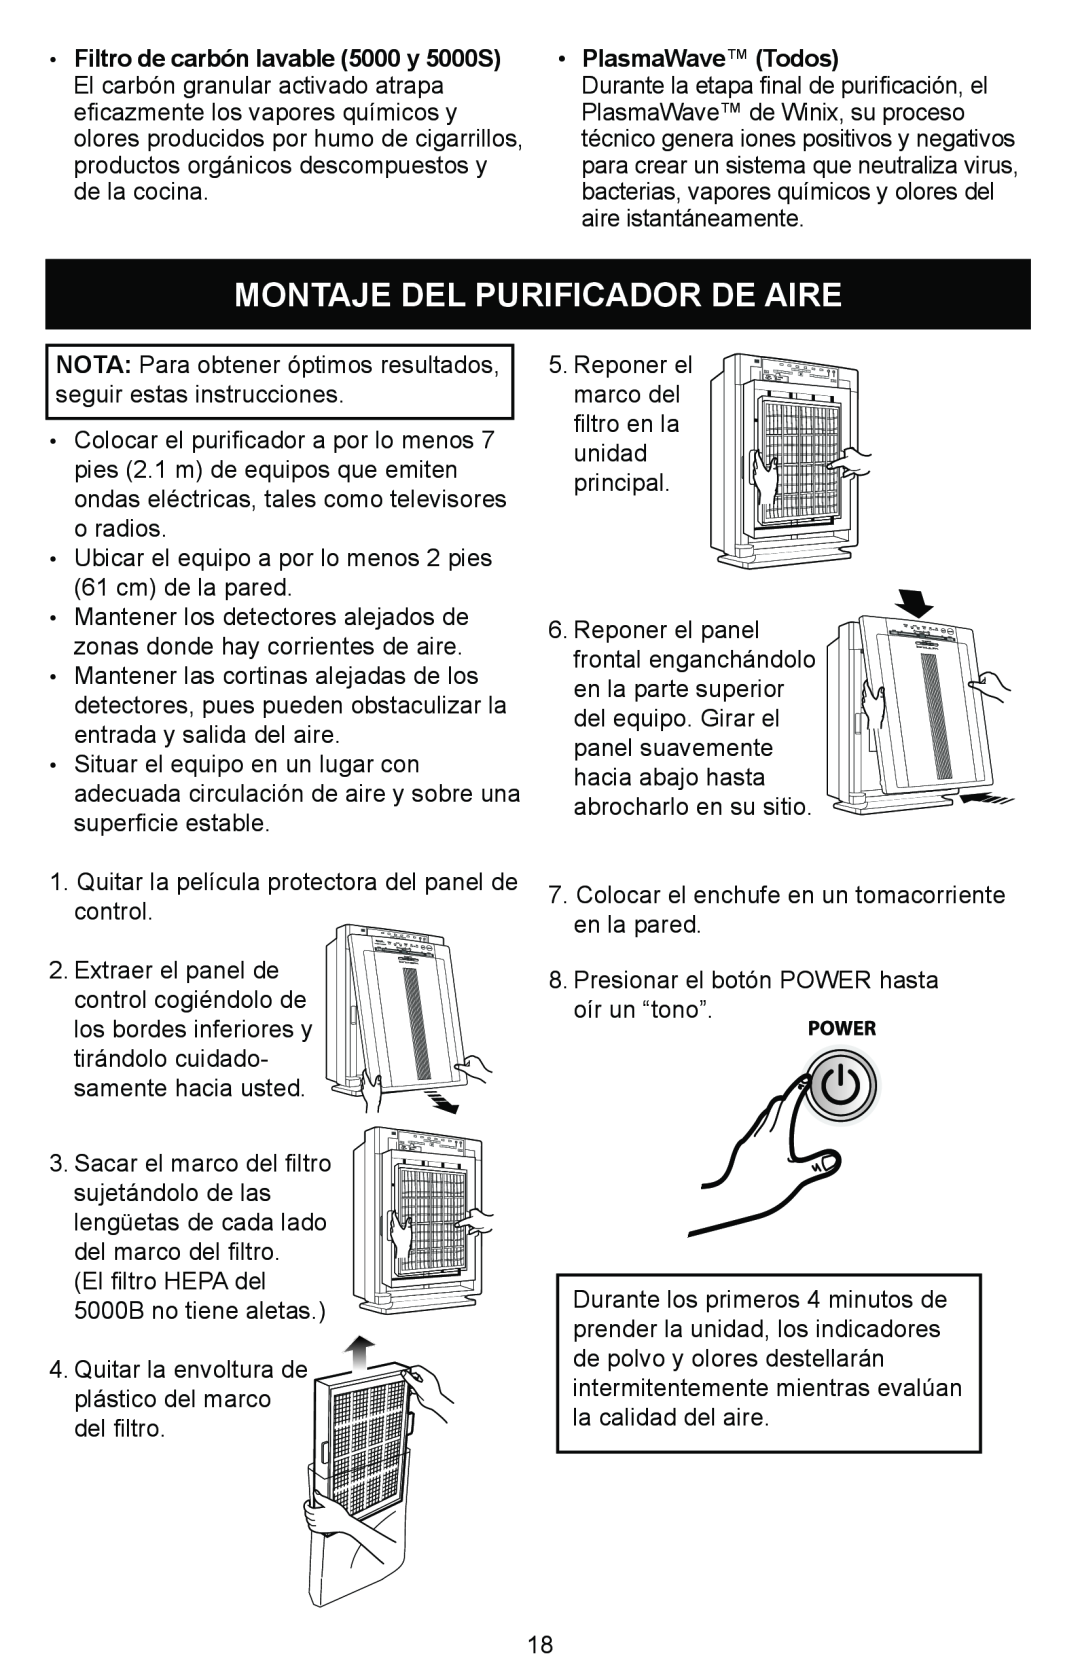 Winix Air Cleaner manual Montaje Del Purificador De Aire, PlasmaWave Todos 